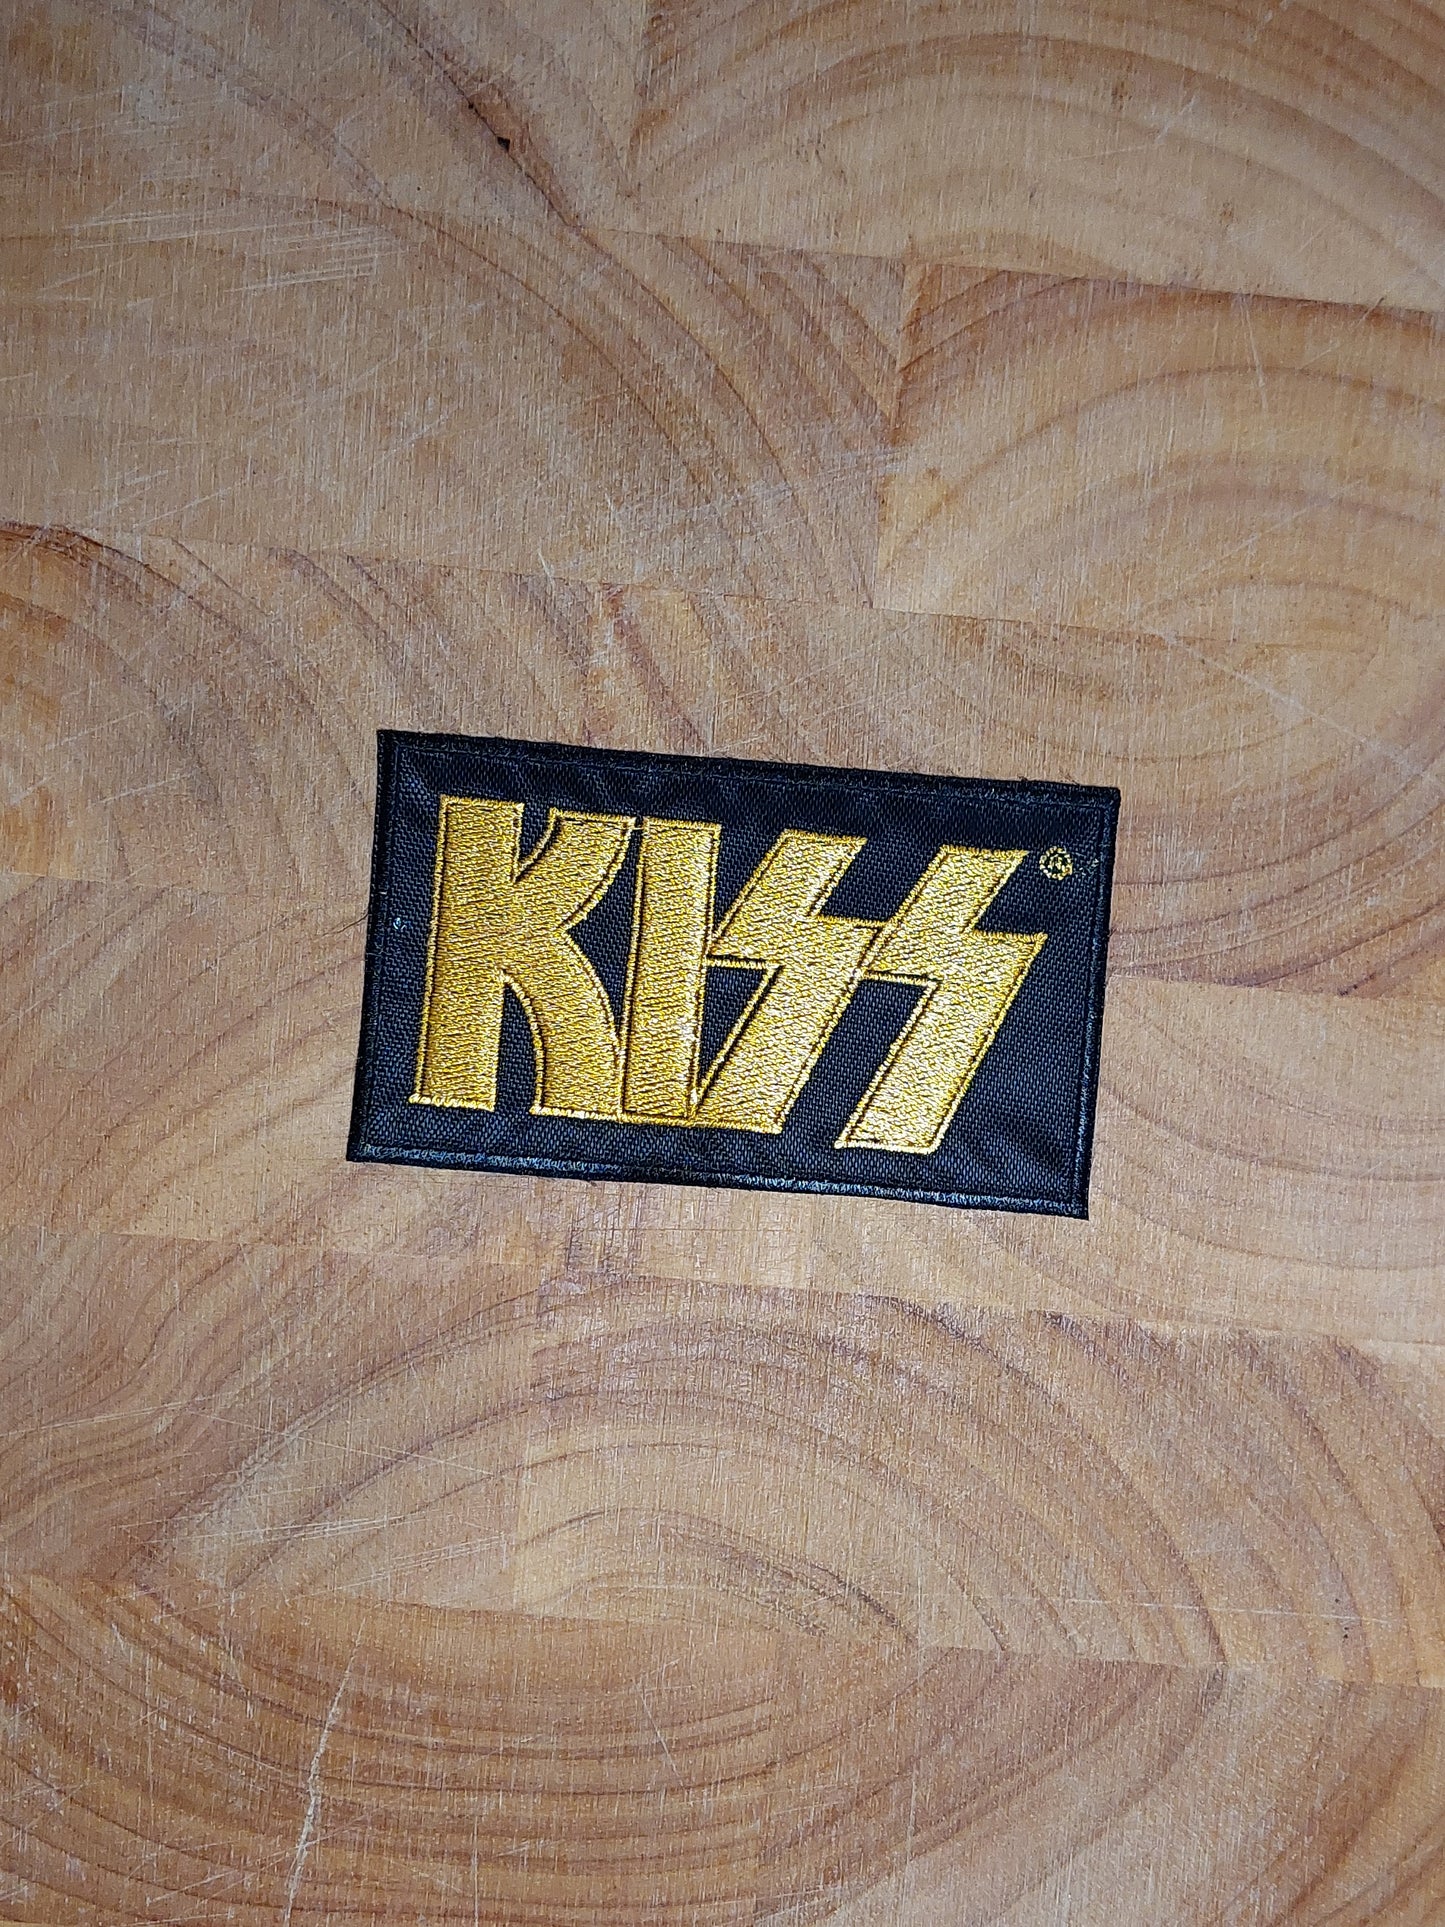 Kiss logo embroidered